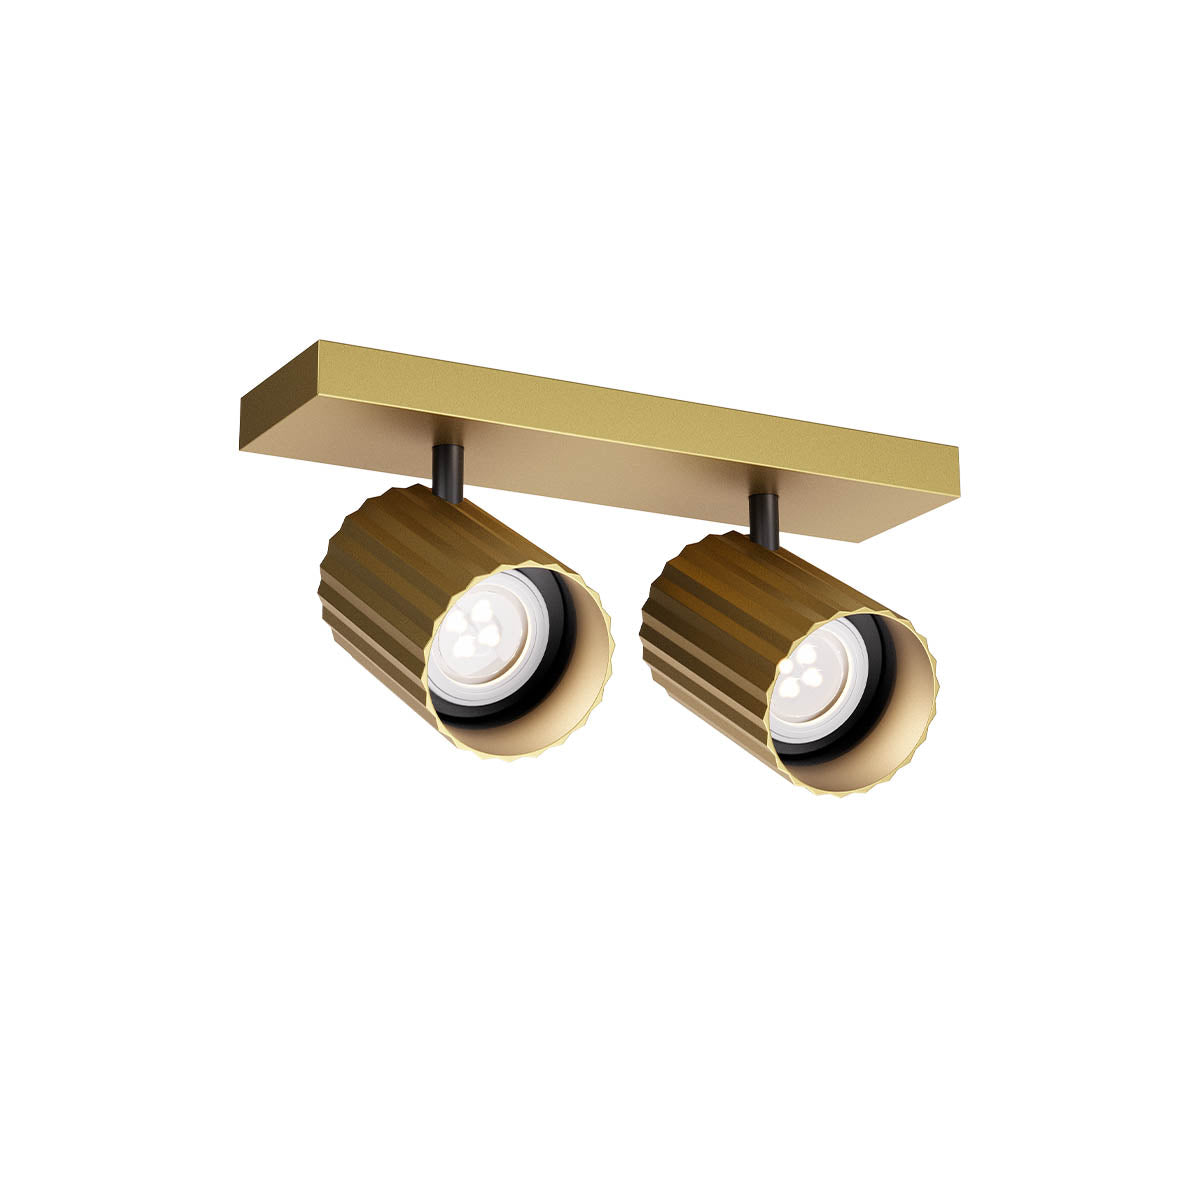 Miniproiector DELPHI, auriu mat, GU10, 2 x 7W, Redo 01-3402